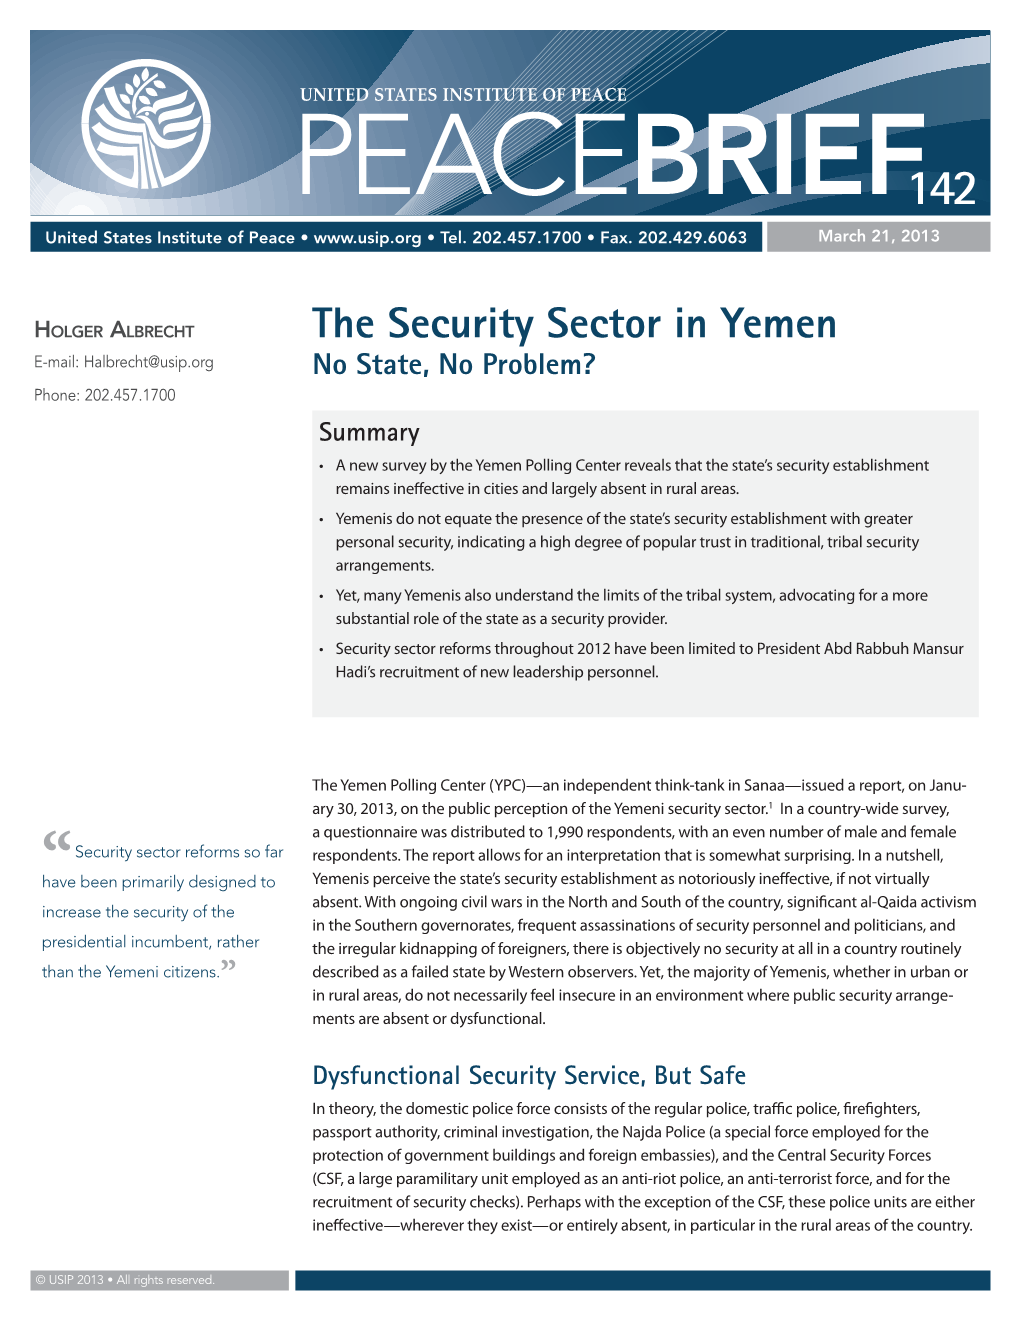 The Security Sector in Yemen